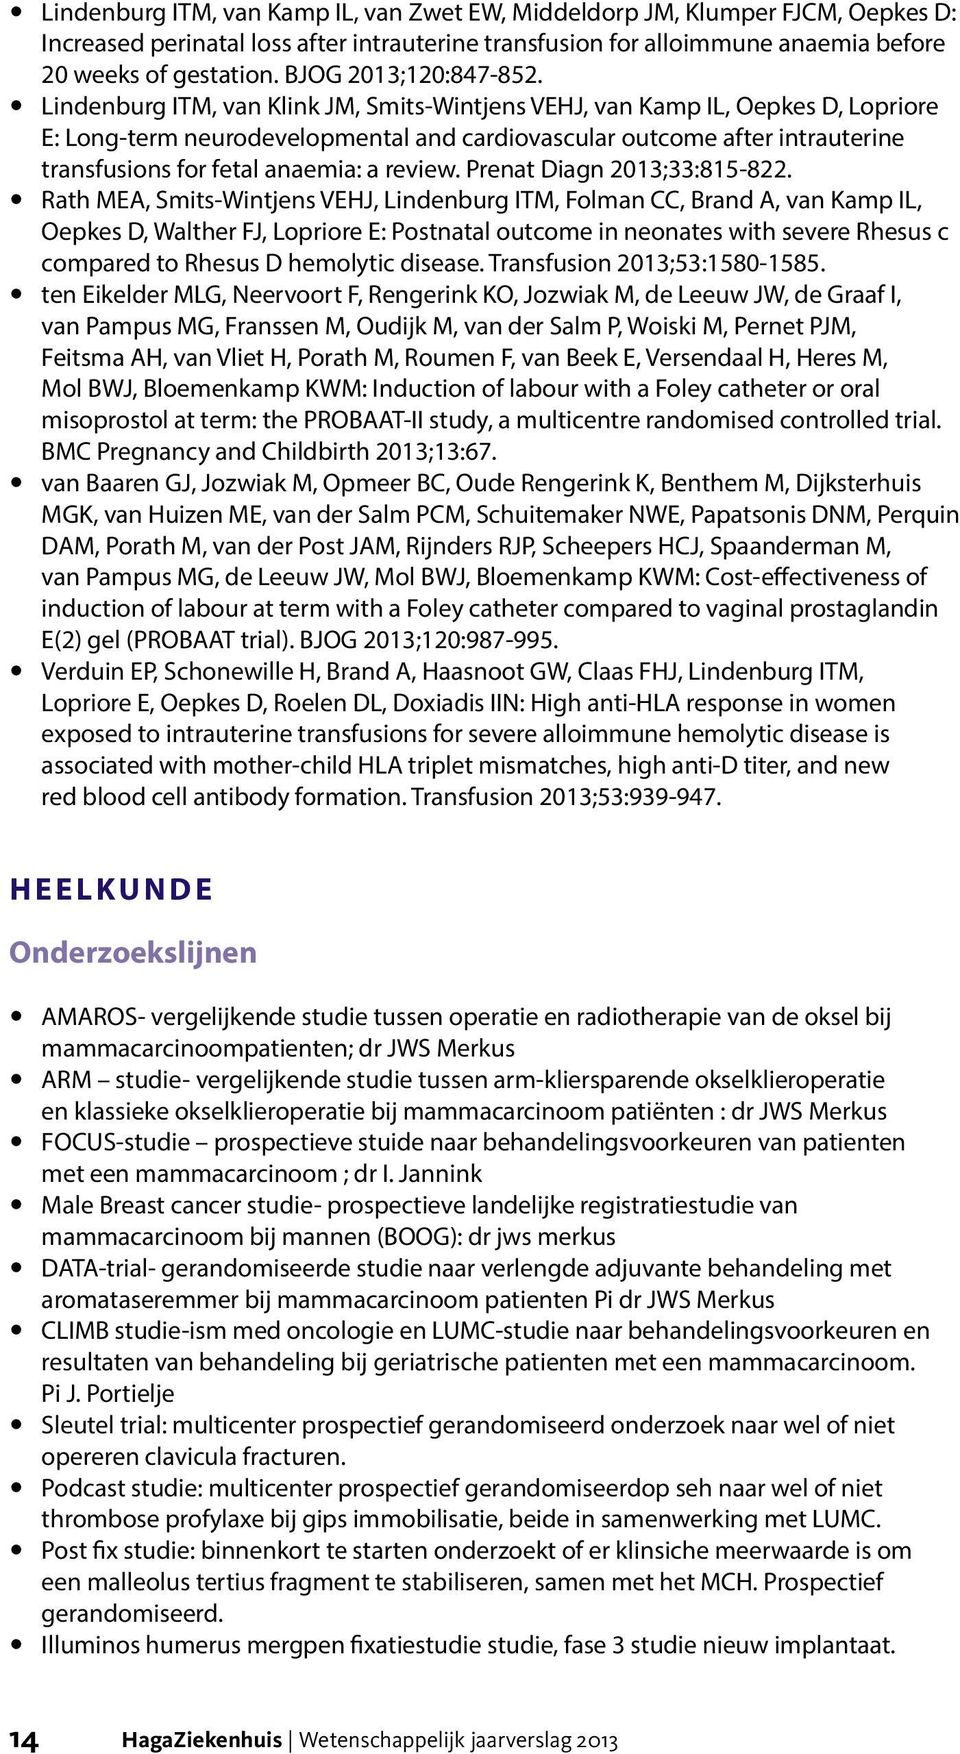 ylindenburg ITM, van Klink JM, Smits-Wintjens VEHJ, van Kamp IL, Oepkes D, Lopriore E: Long-term neurodevelopmental and cardiovascular outcome after intrauterine transfusions for fetal anaemia: a